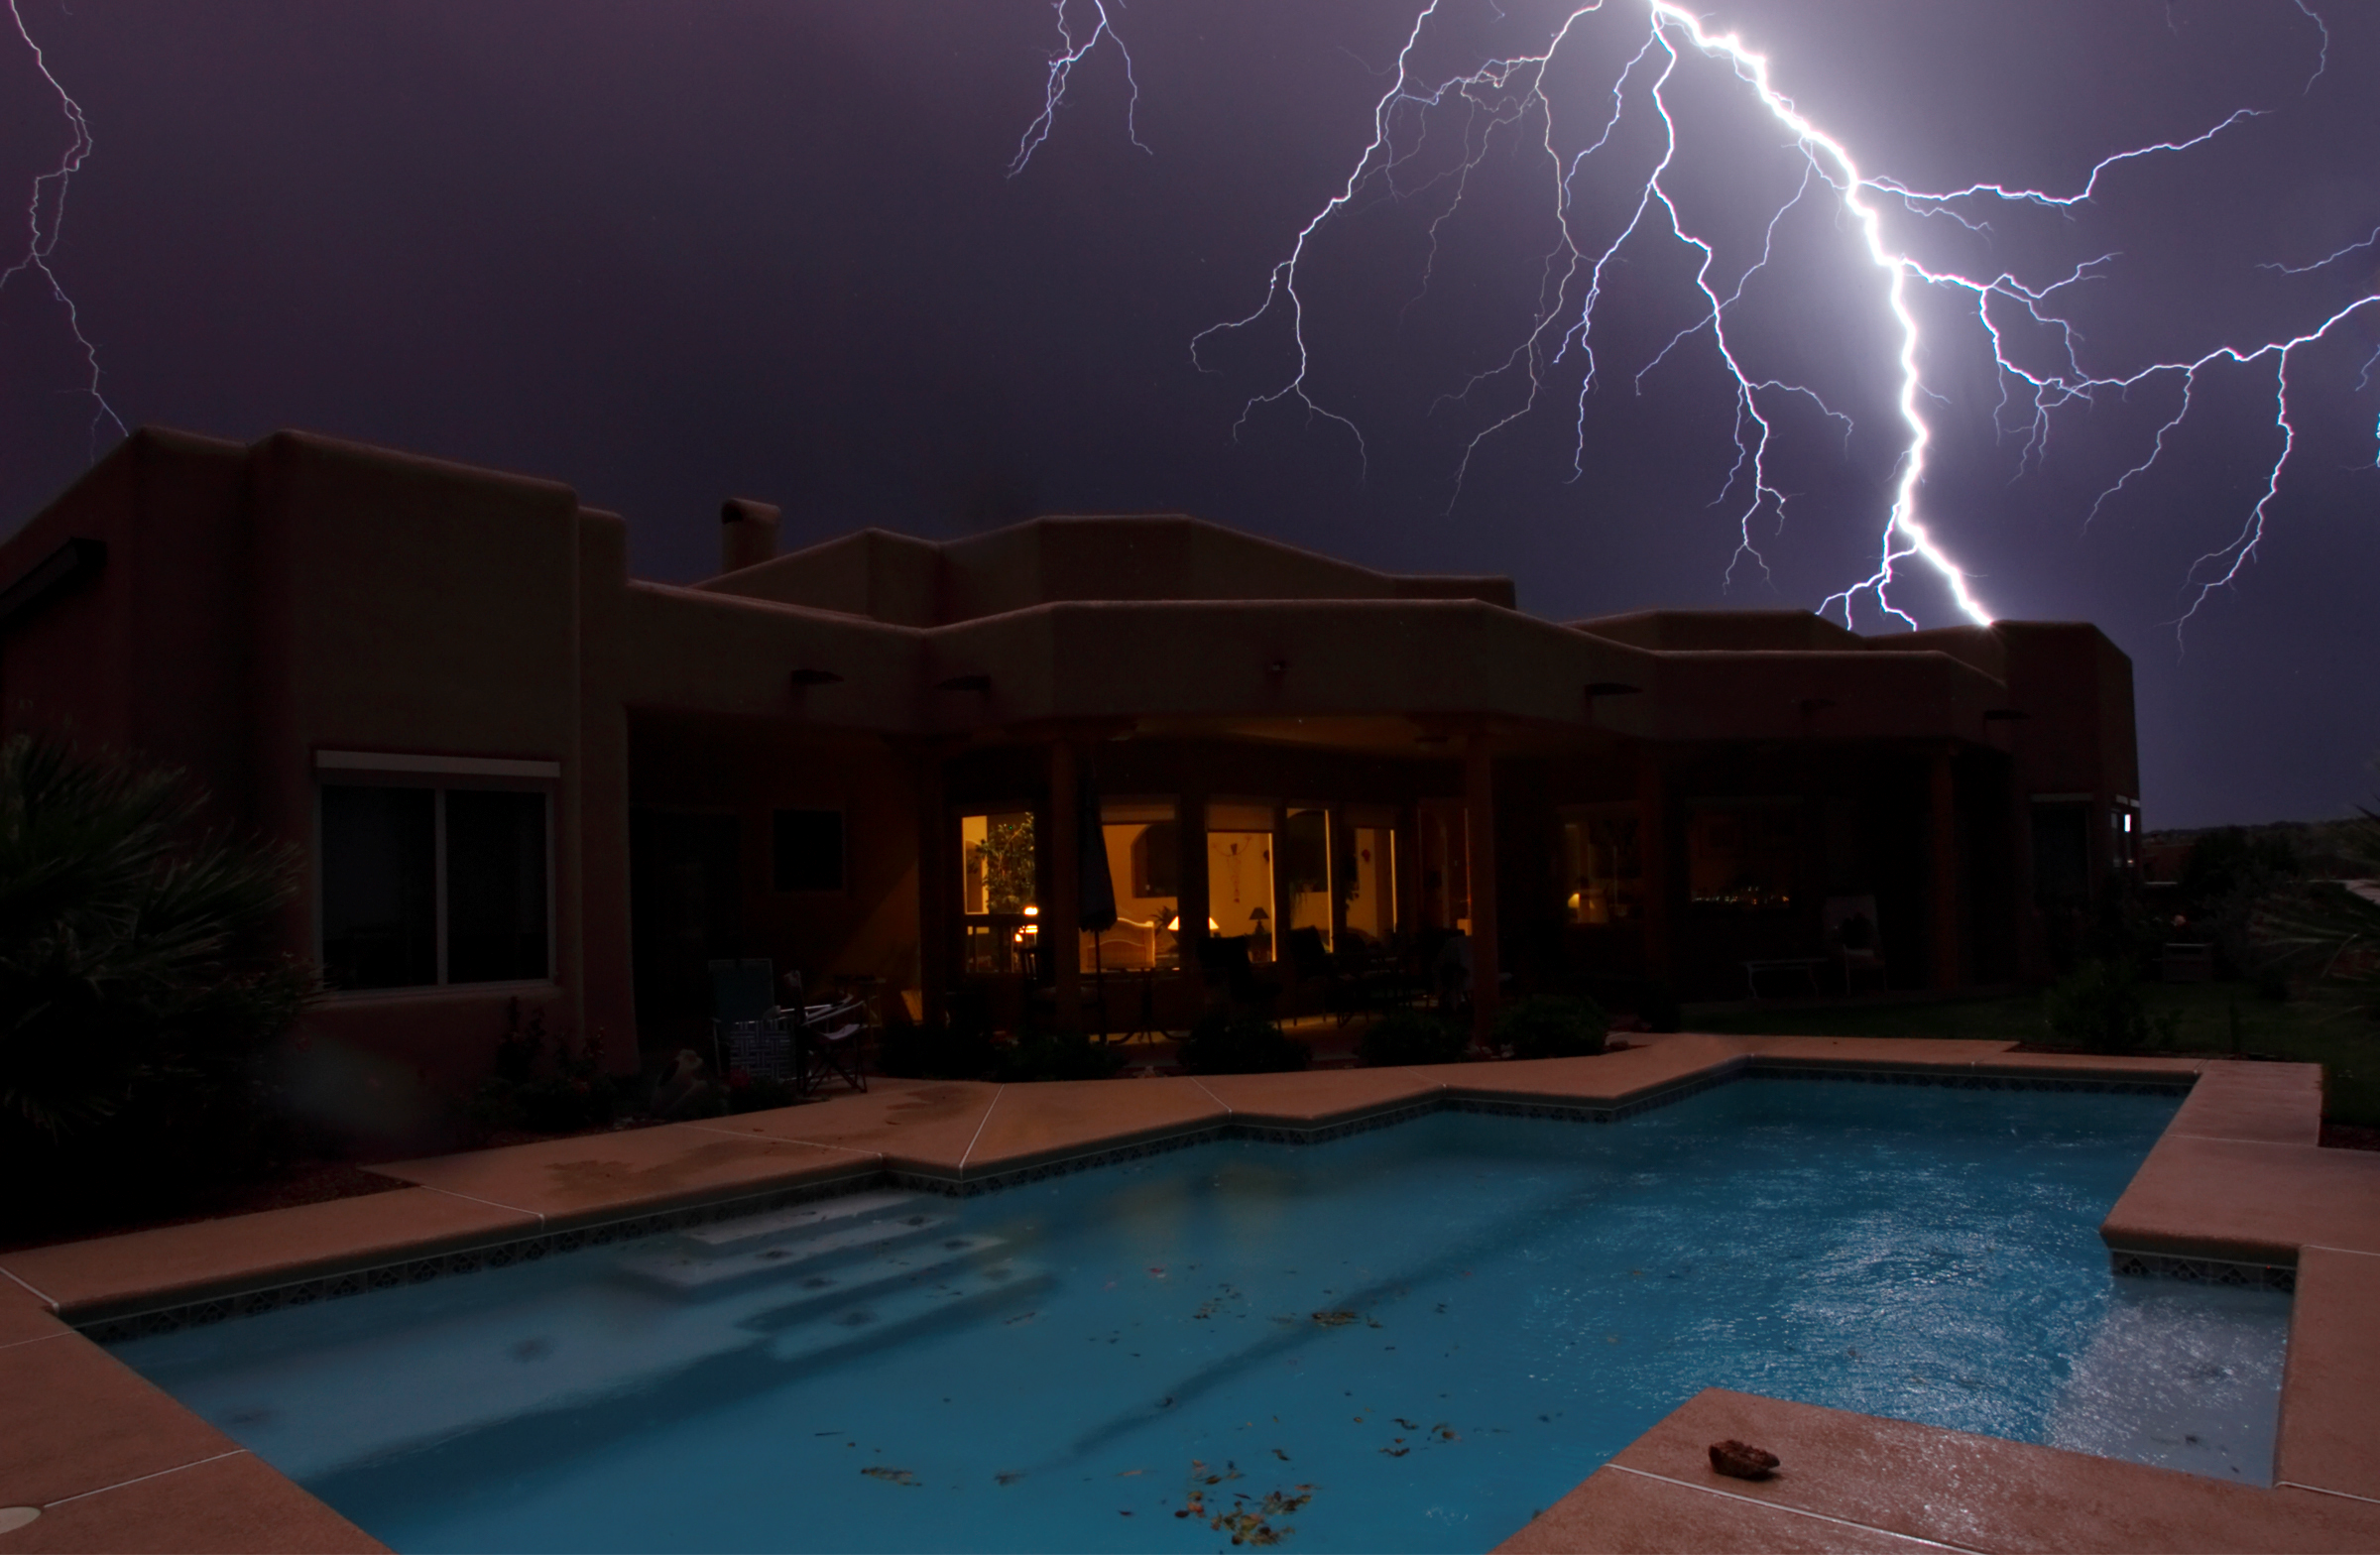 Thunderstorm and lightning over residence